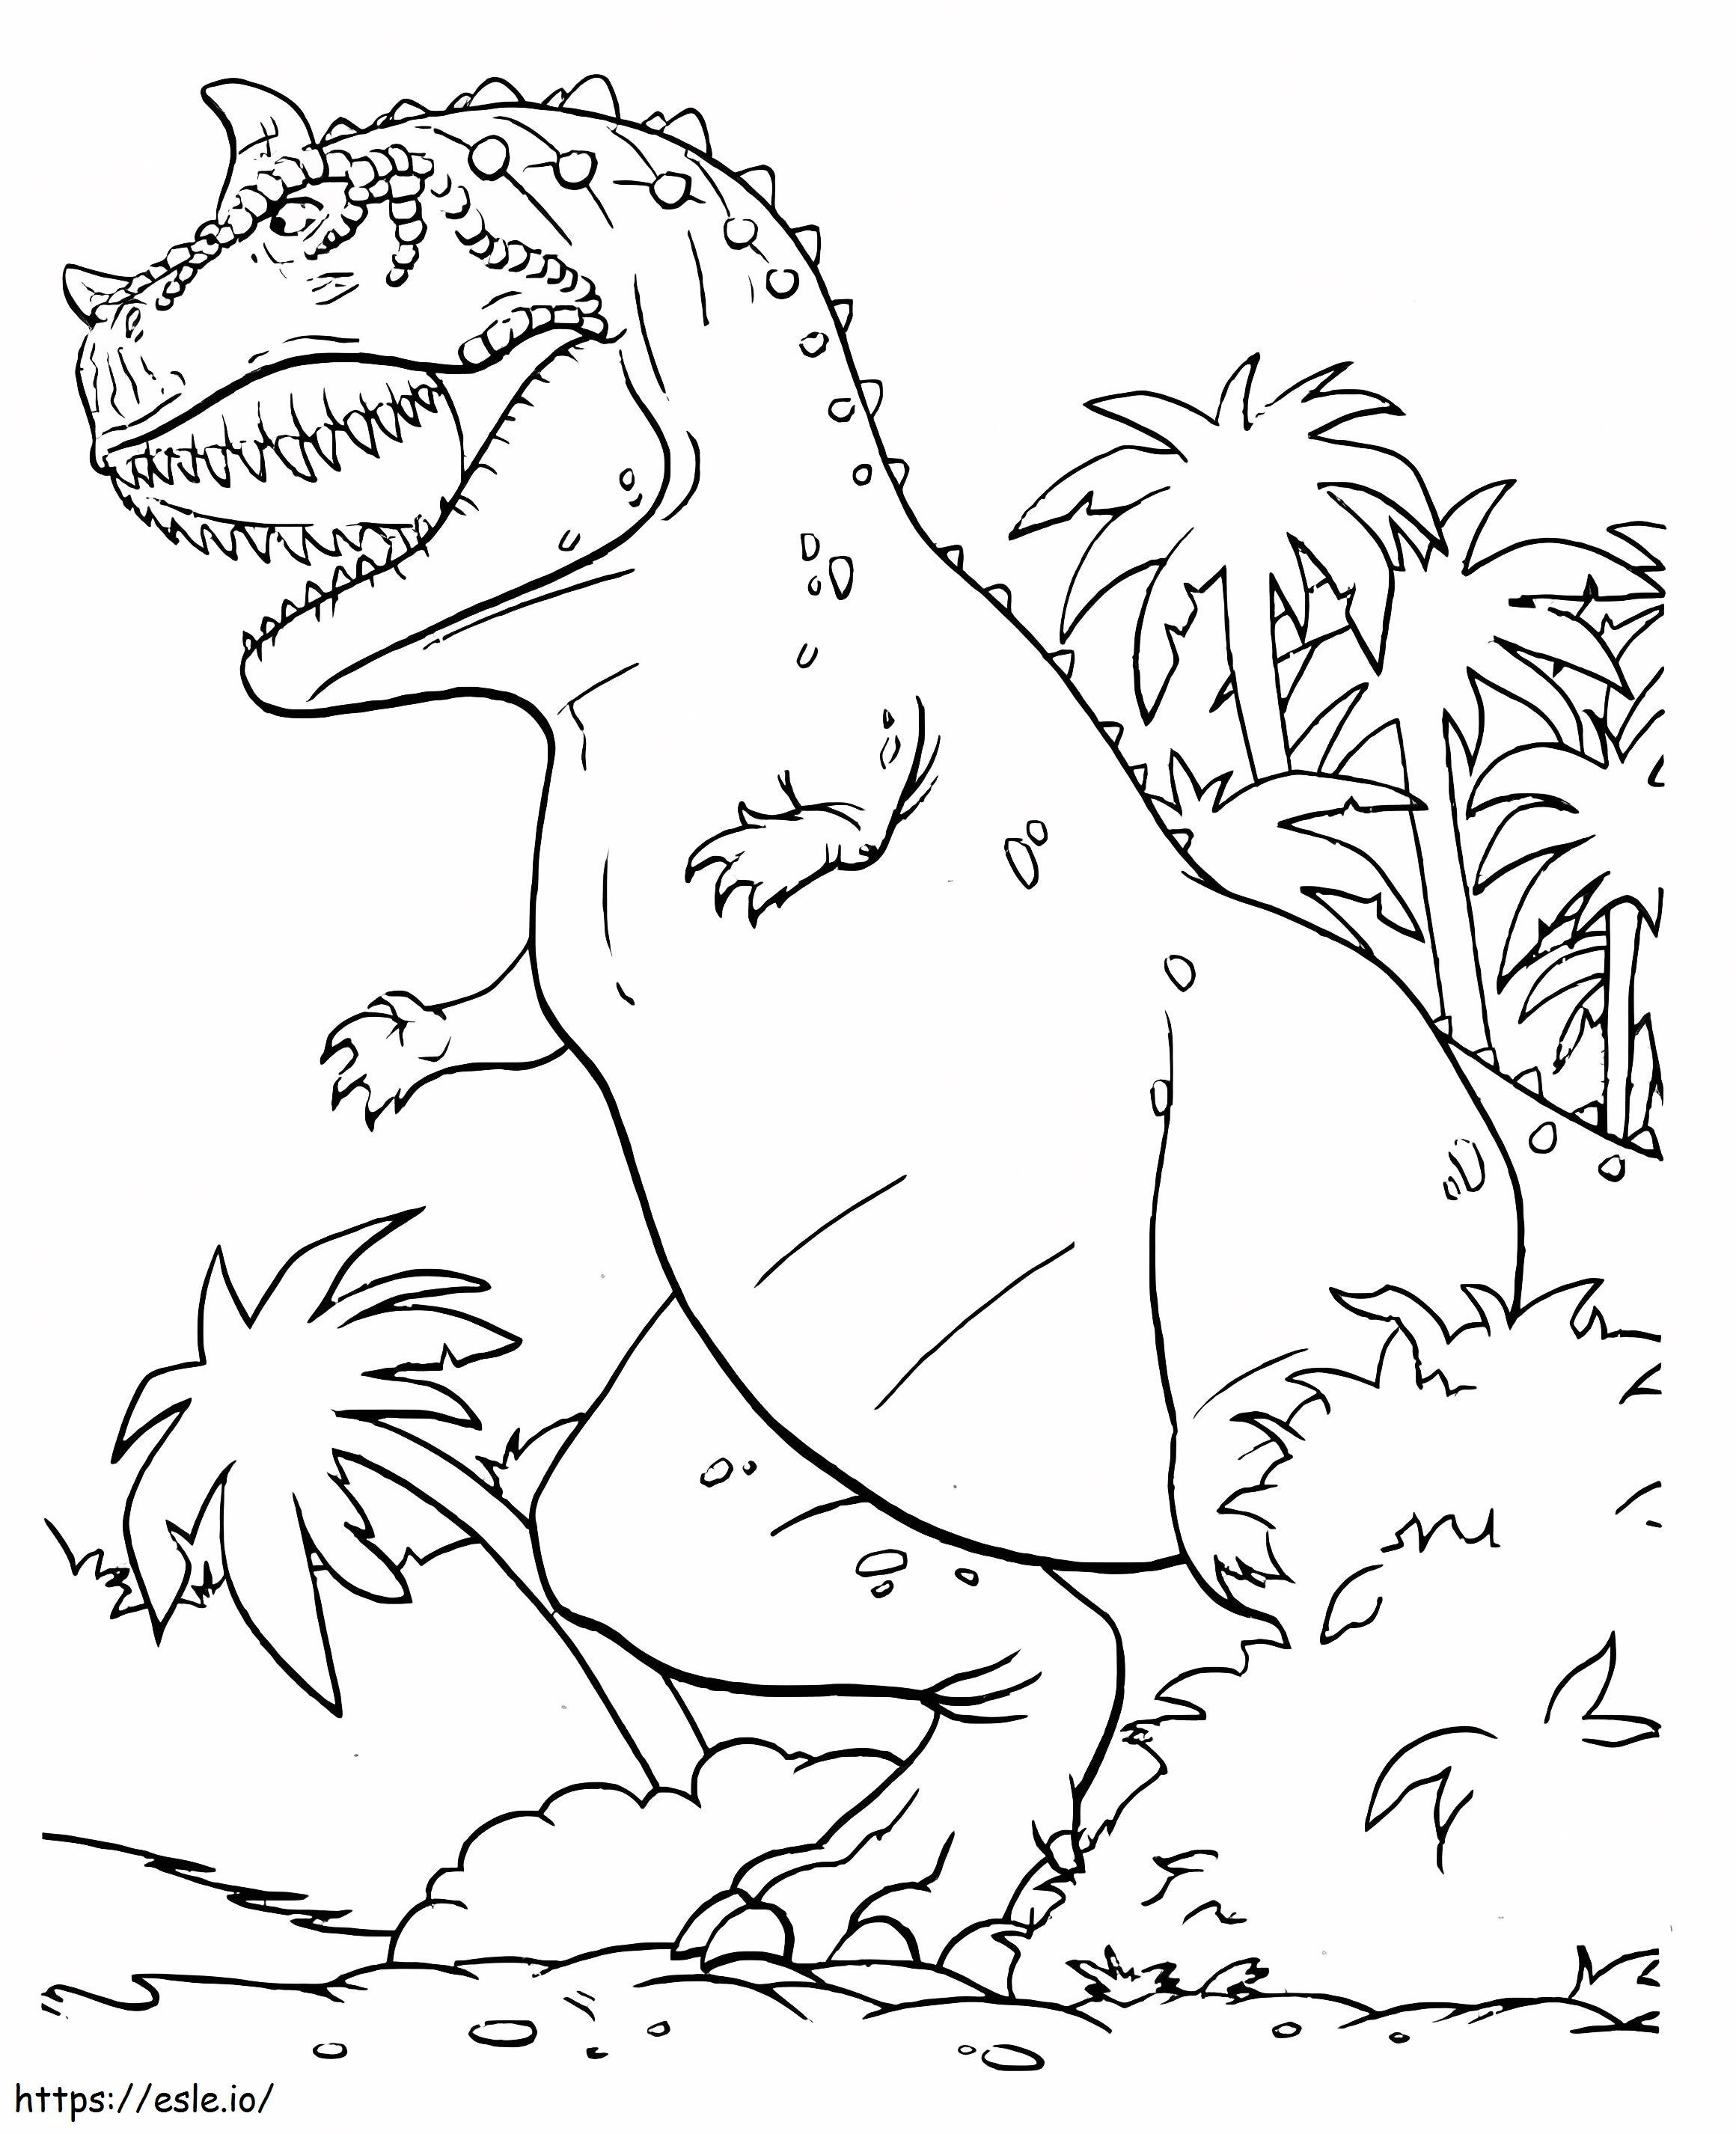 Carnotaurus 6 coloring page